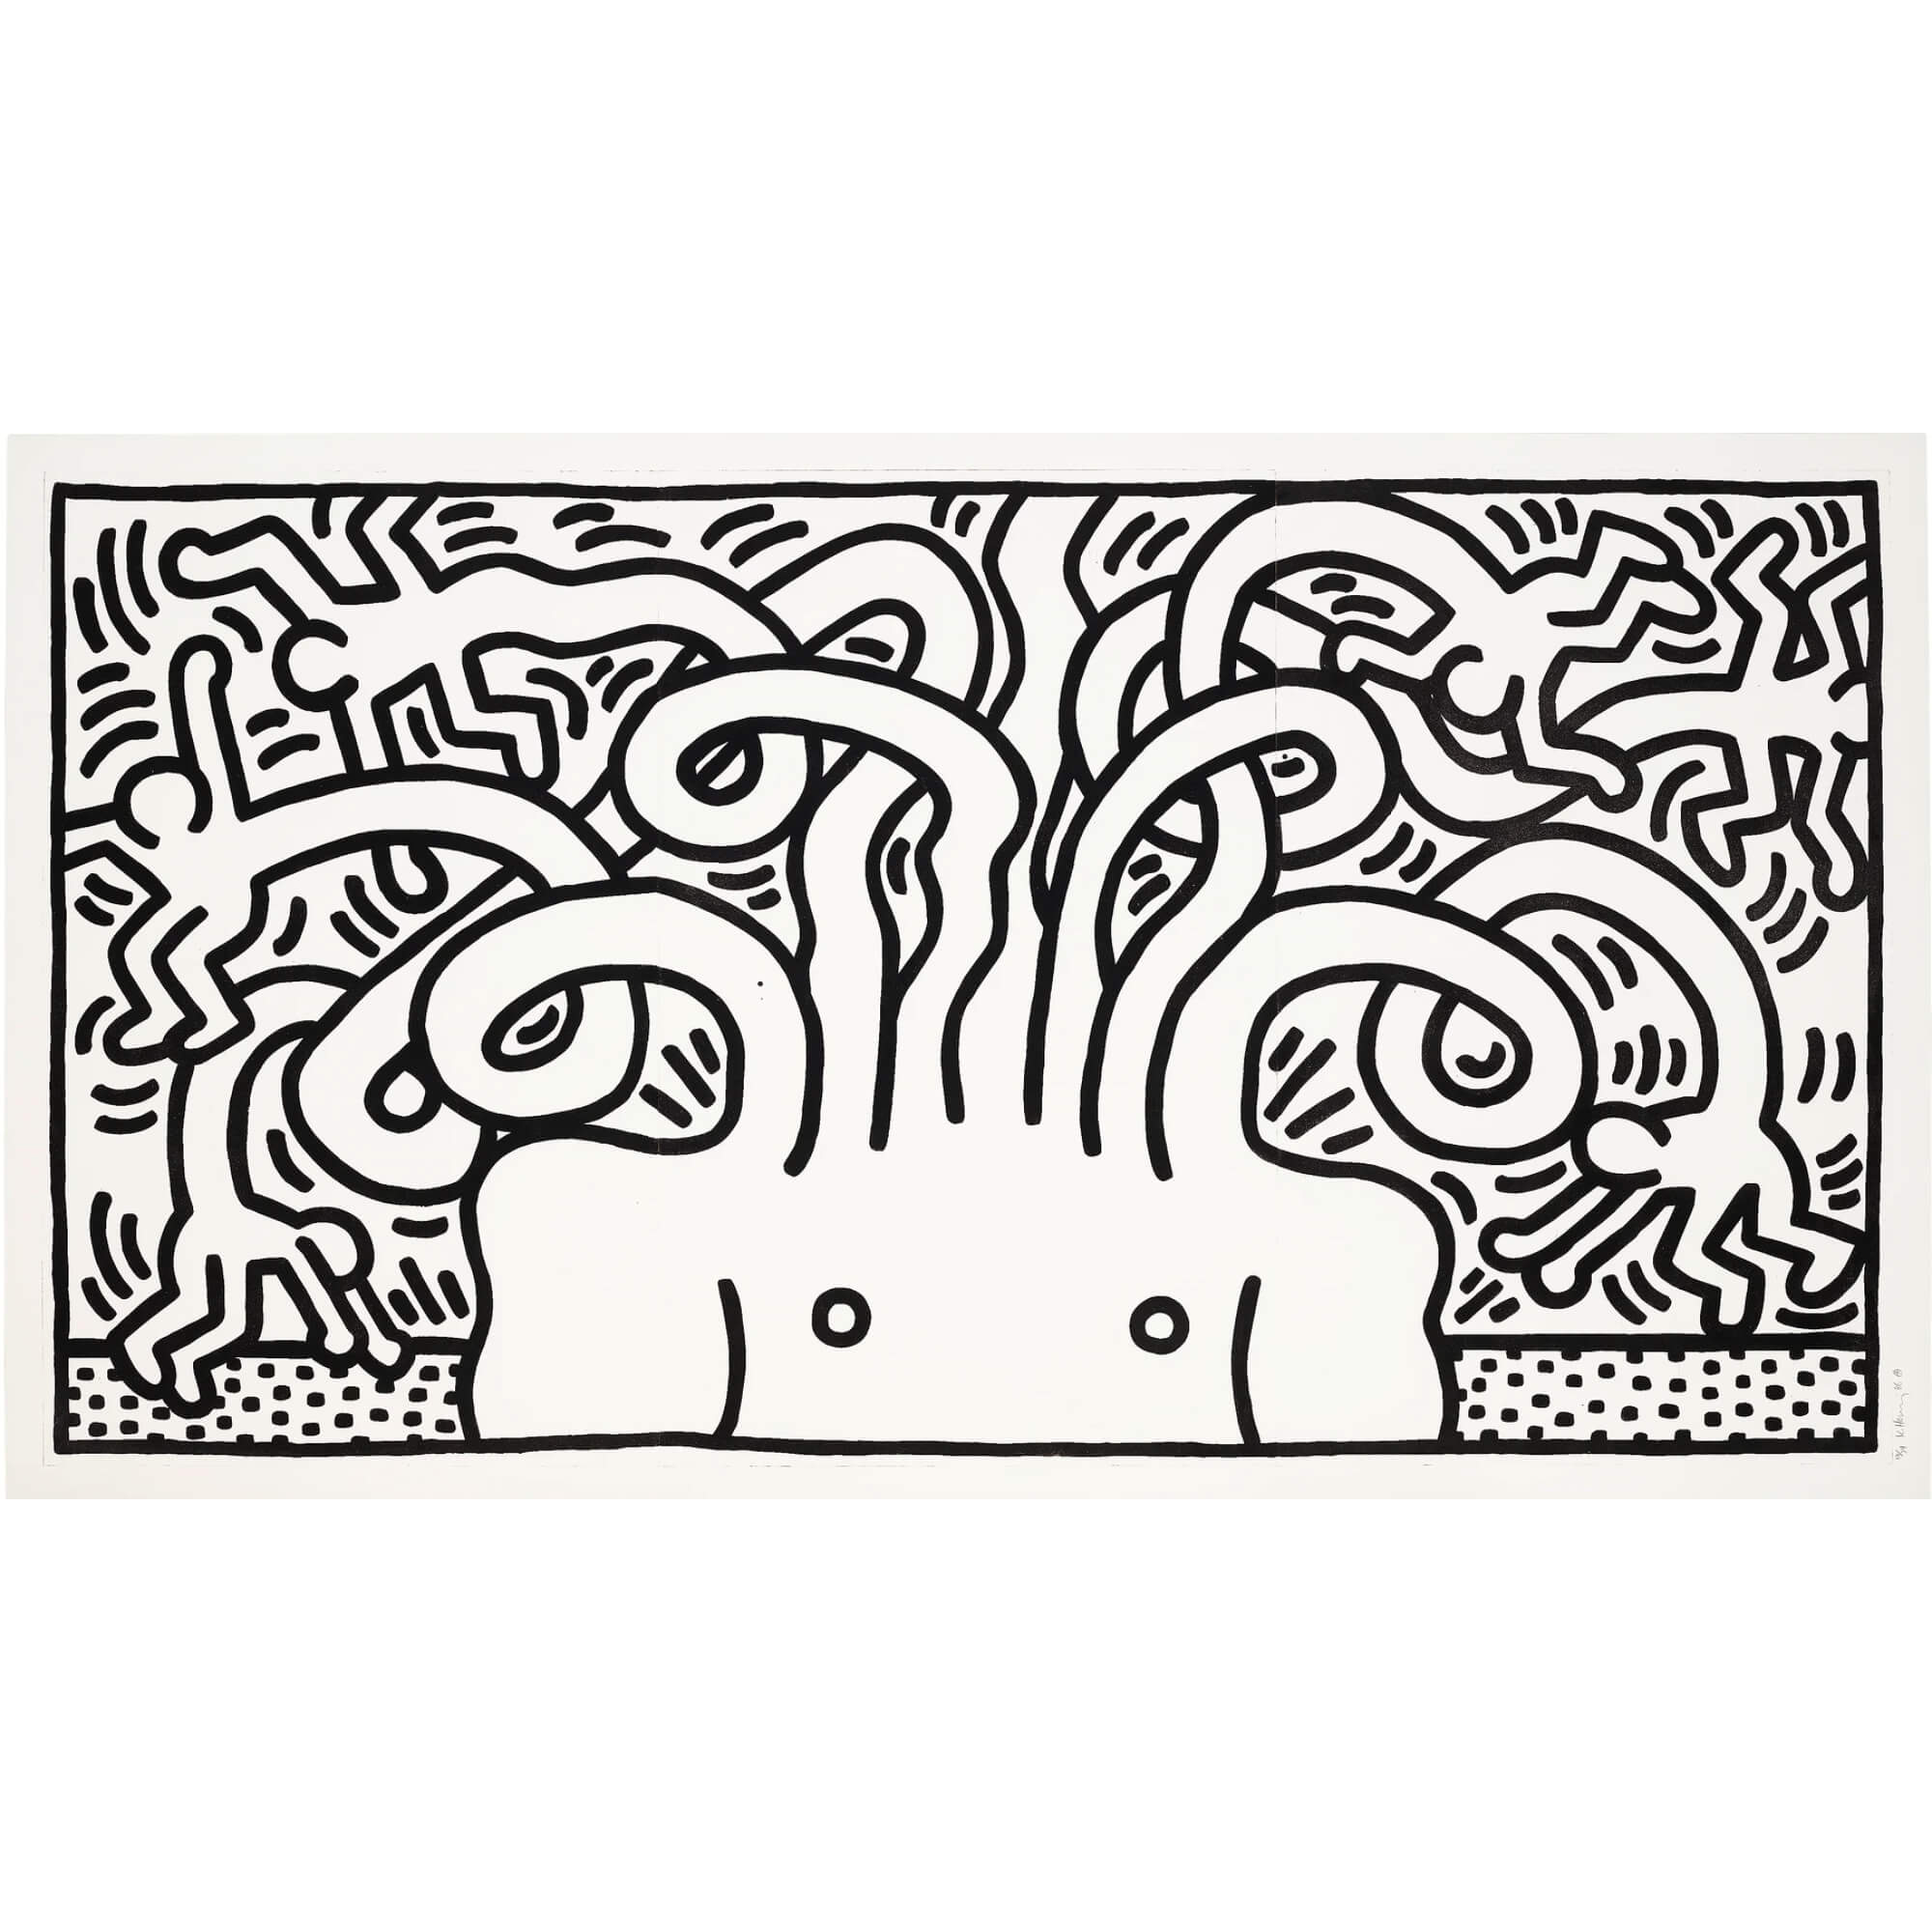 Keith Haring-Medusa Head - Keith Haring-art print